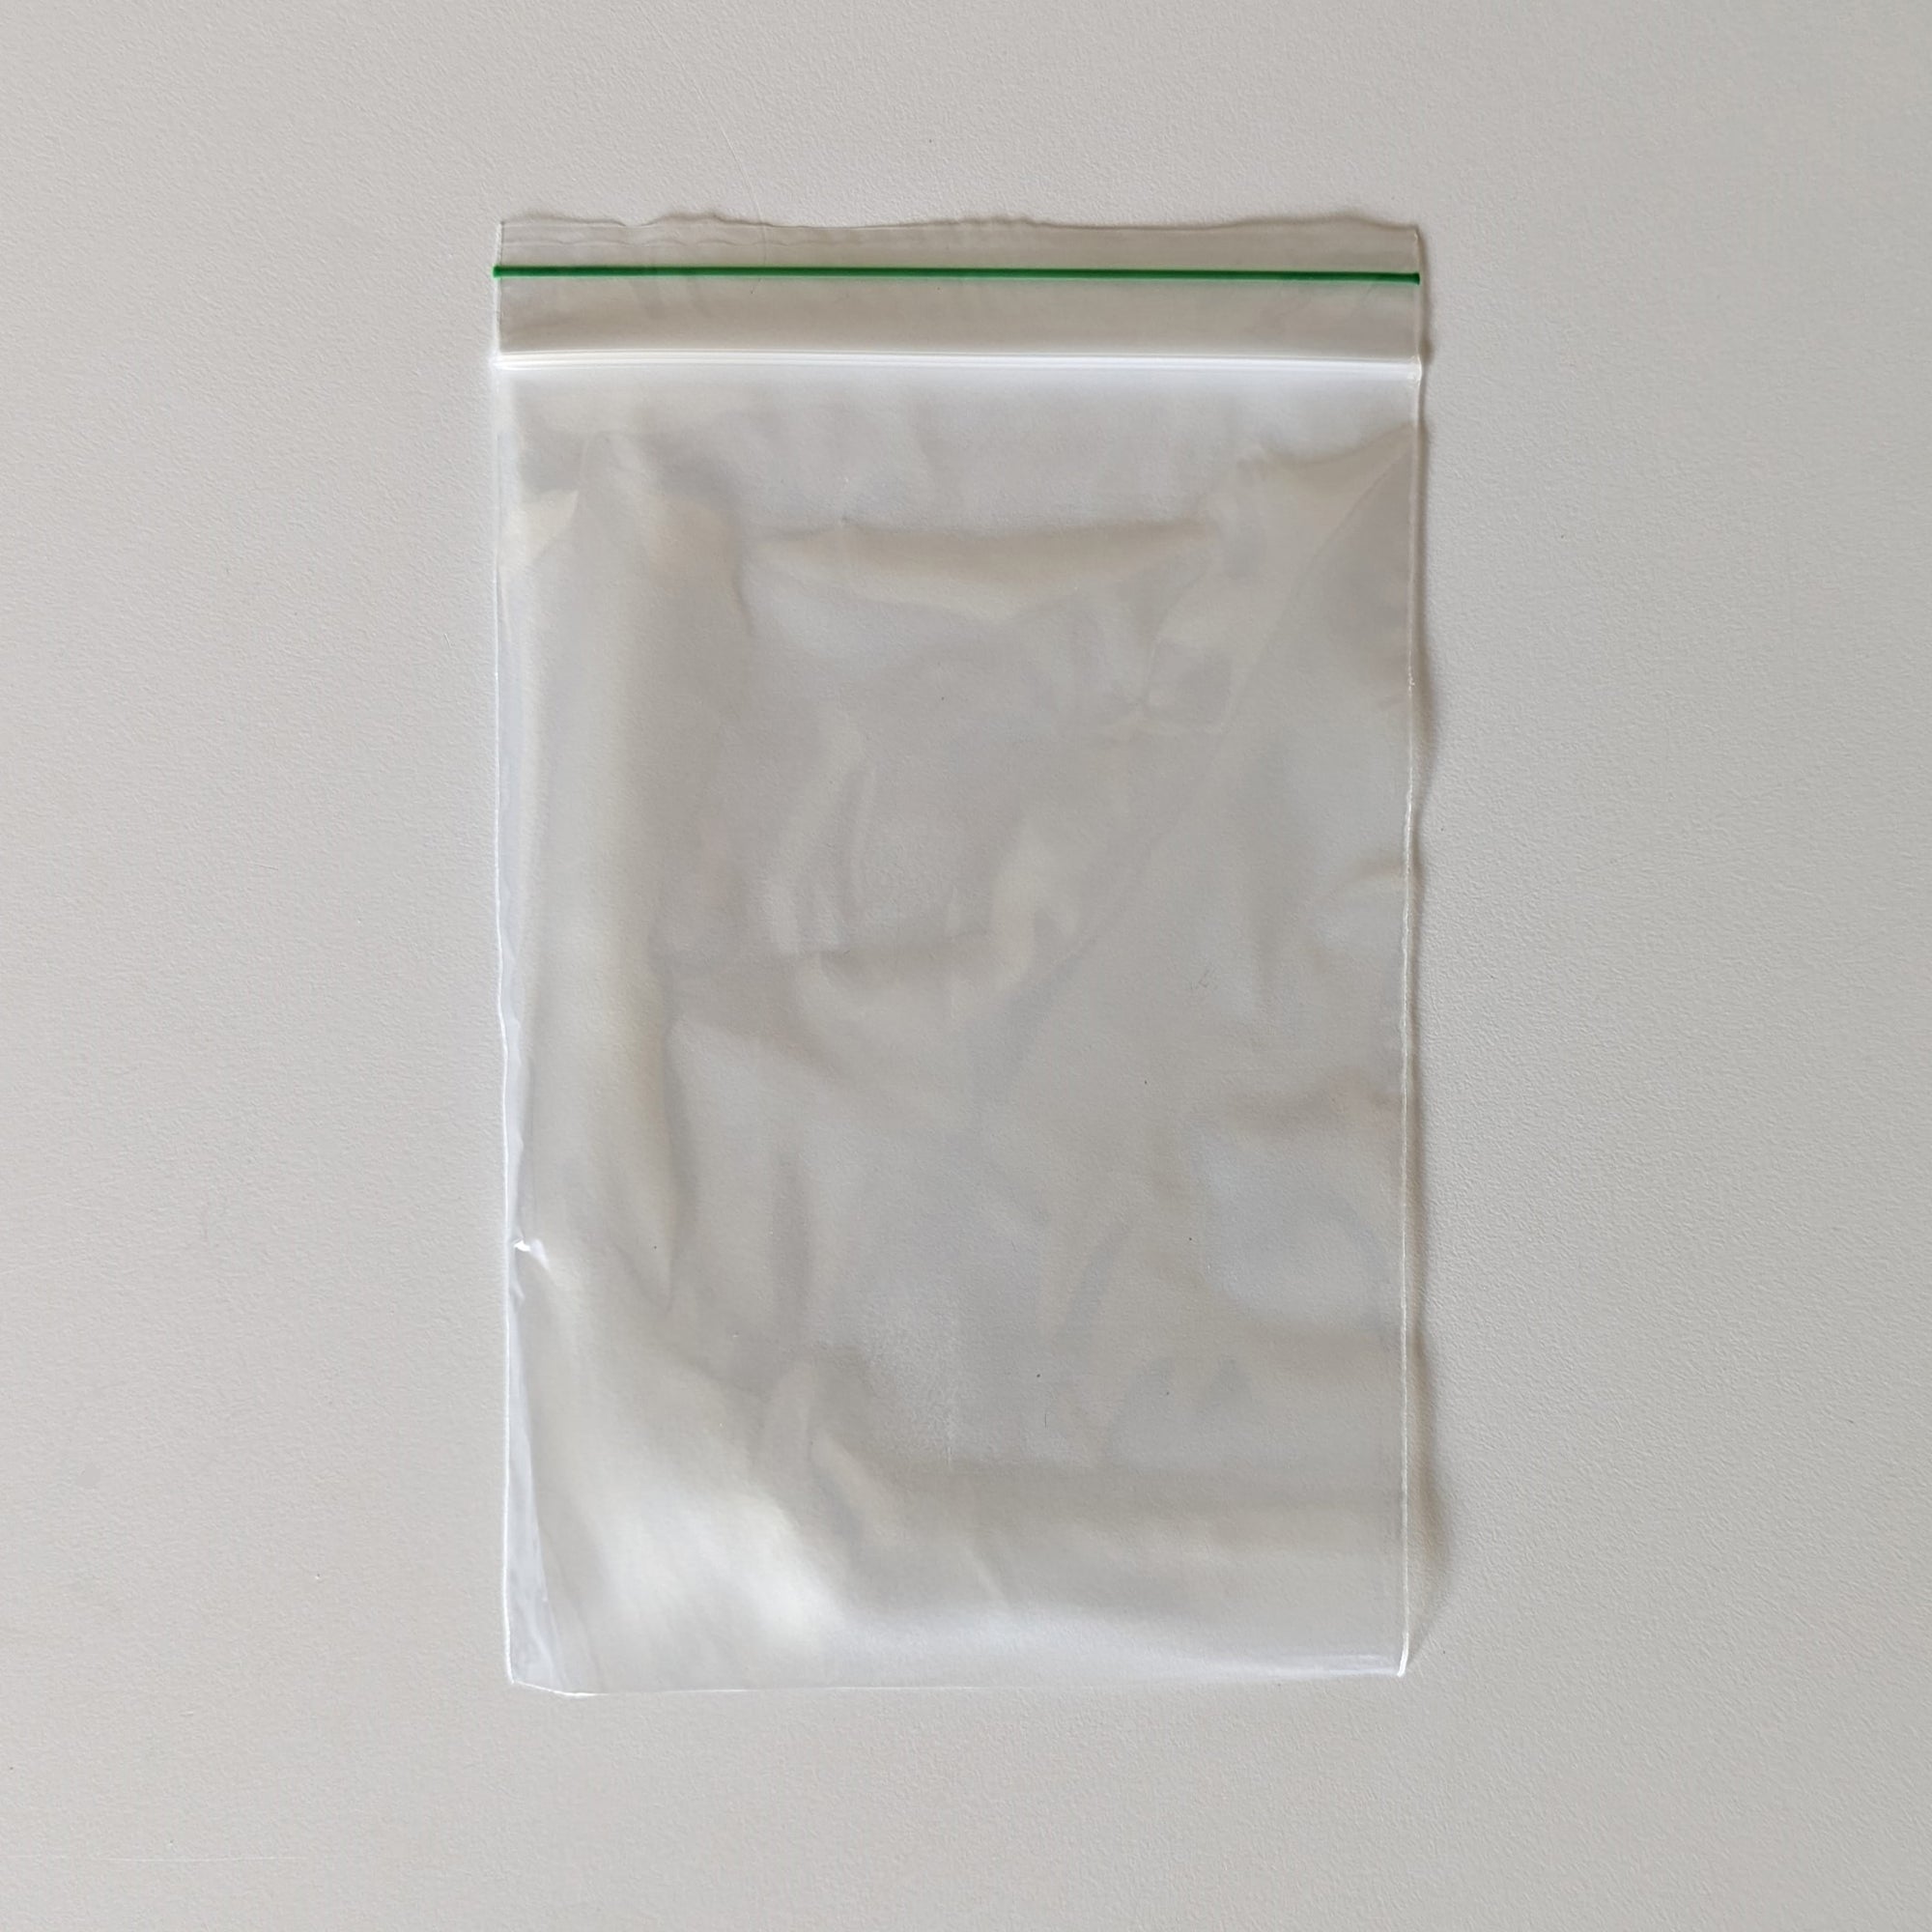 Pint Size Clear Landfill-Biodegradable Plastic Ziplock Bags 1